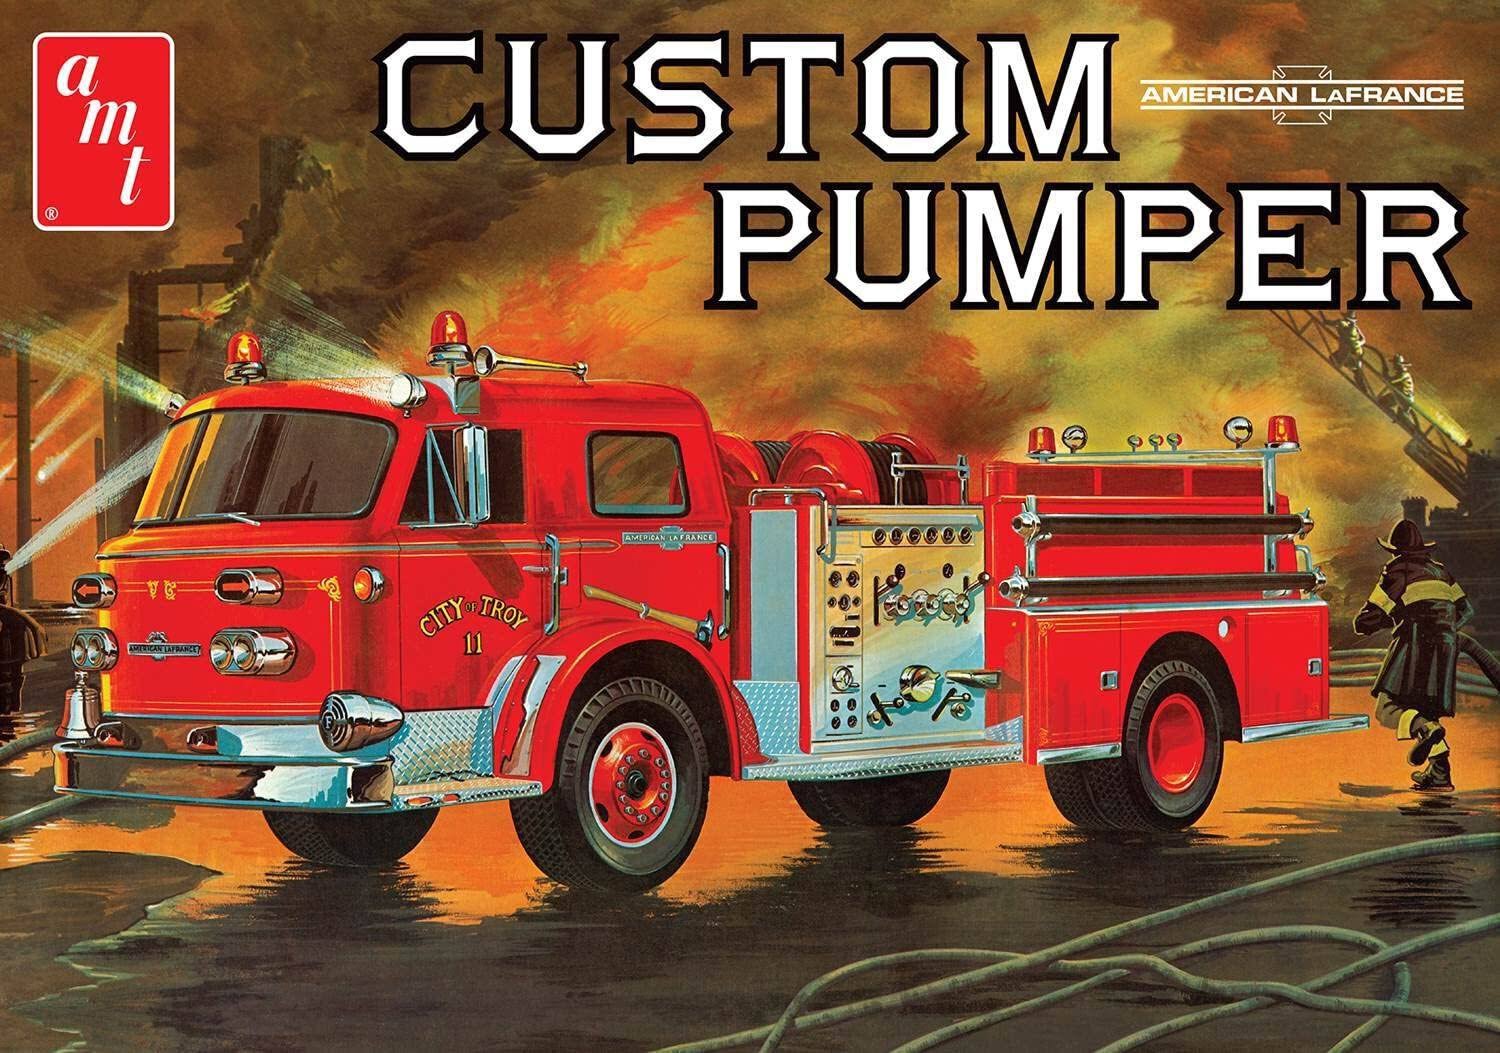 AMT Scale Vehicle Truck Model Toy Kit - American LaFrance Pumper Fire Truck